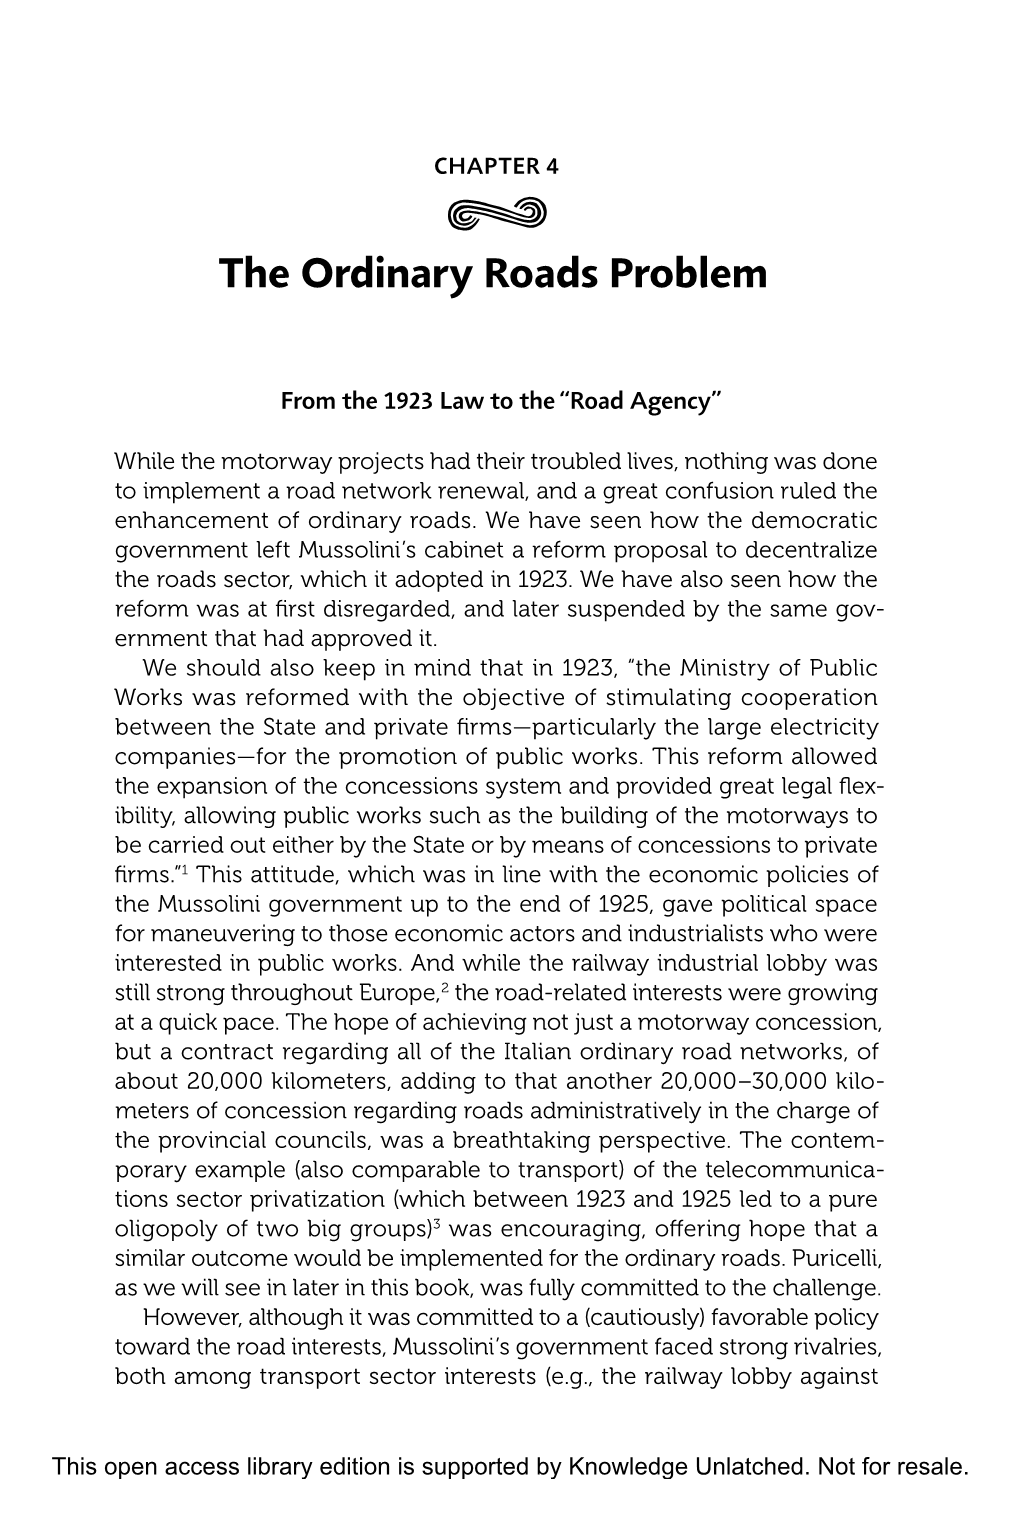 5 the Ordinary Roads Problem